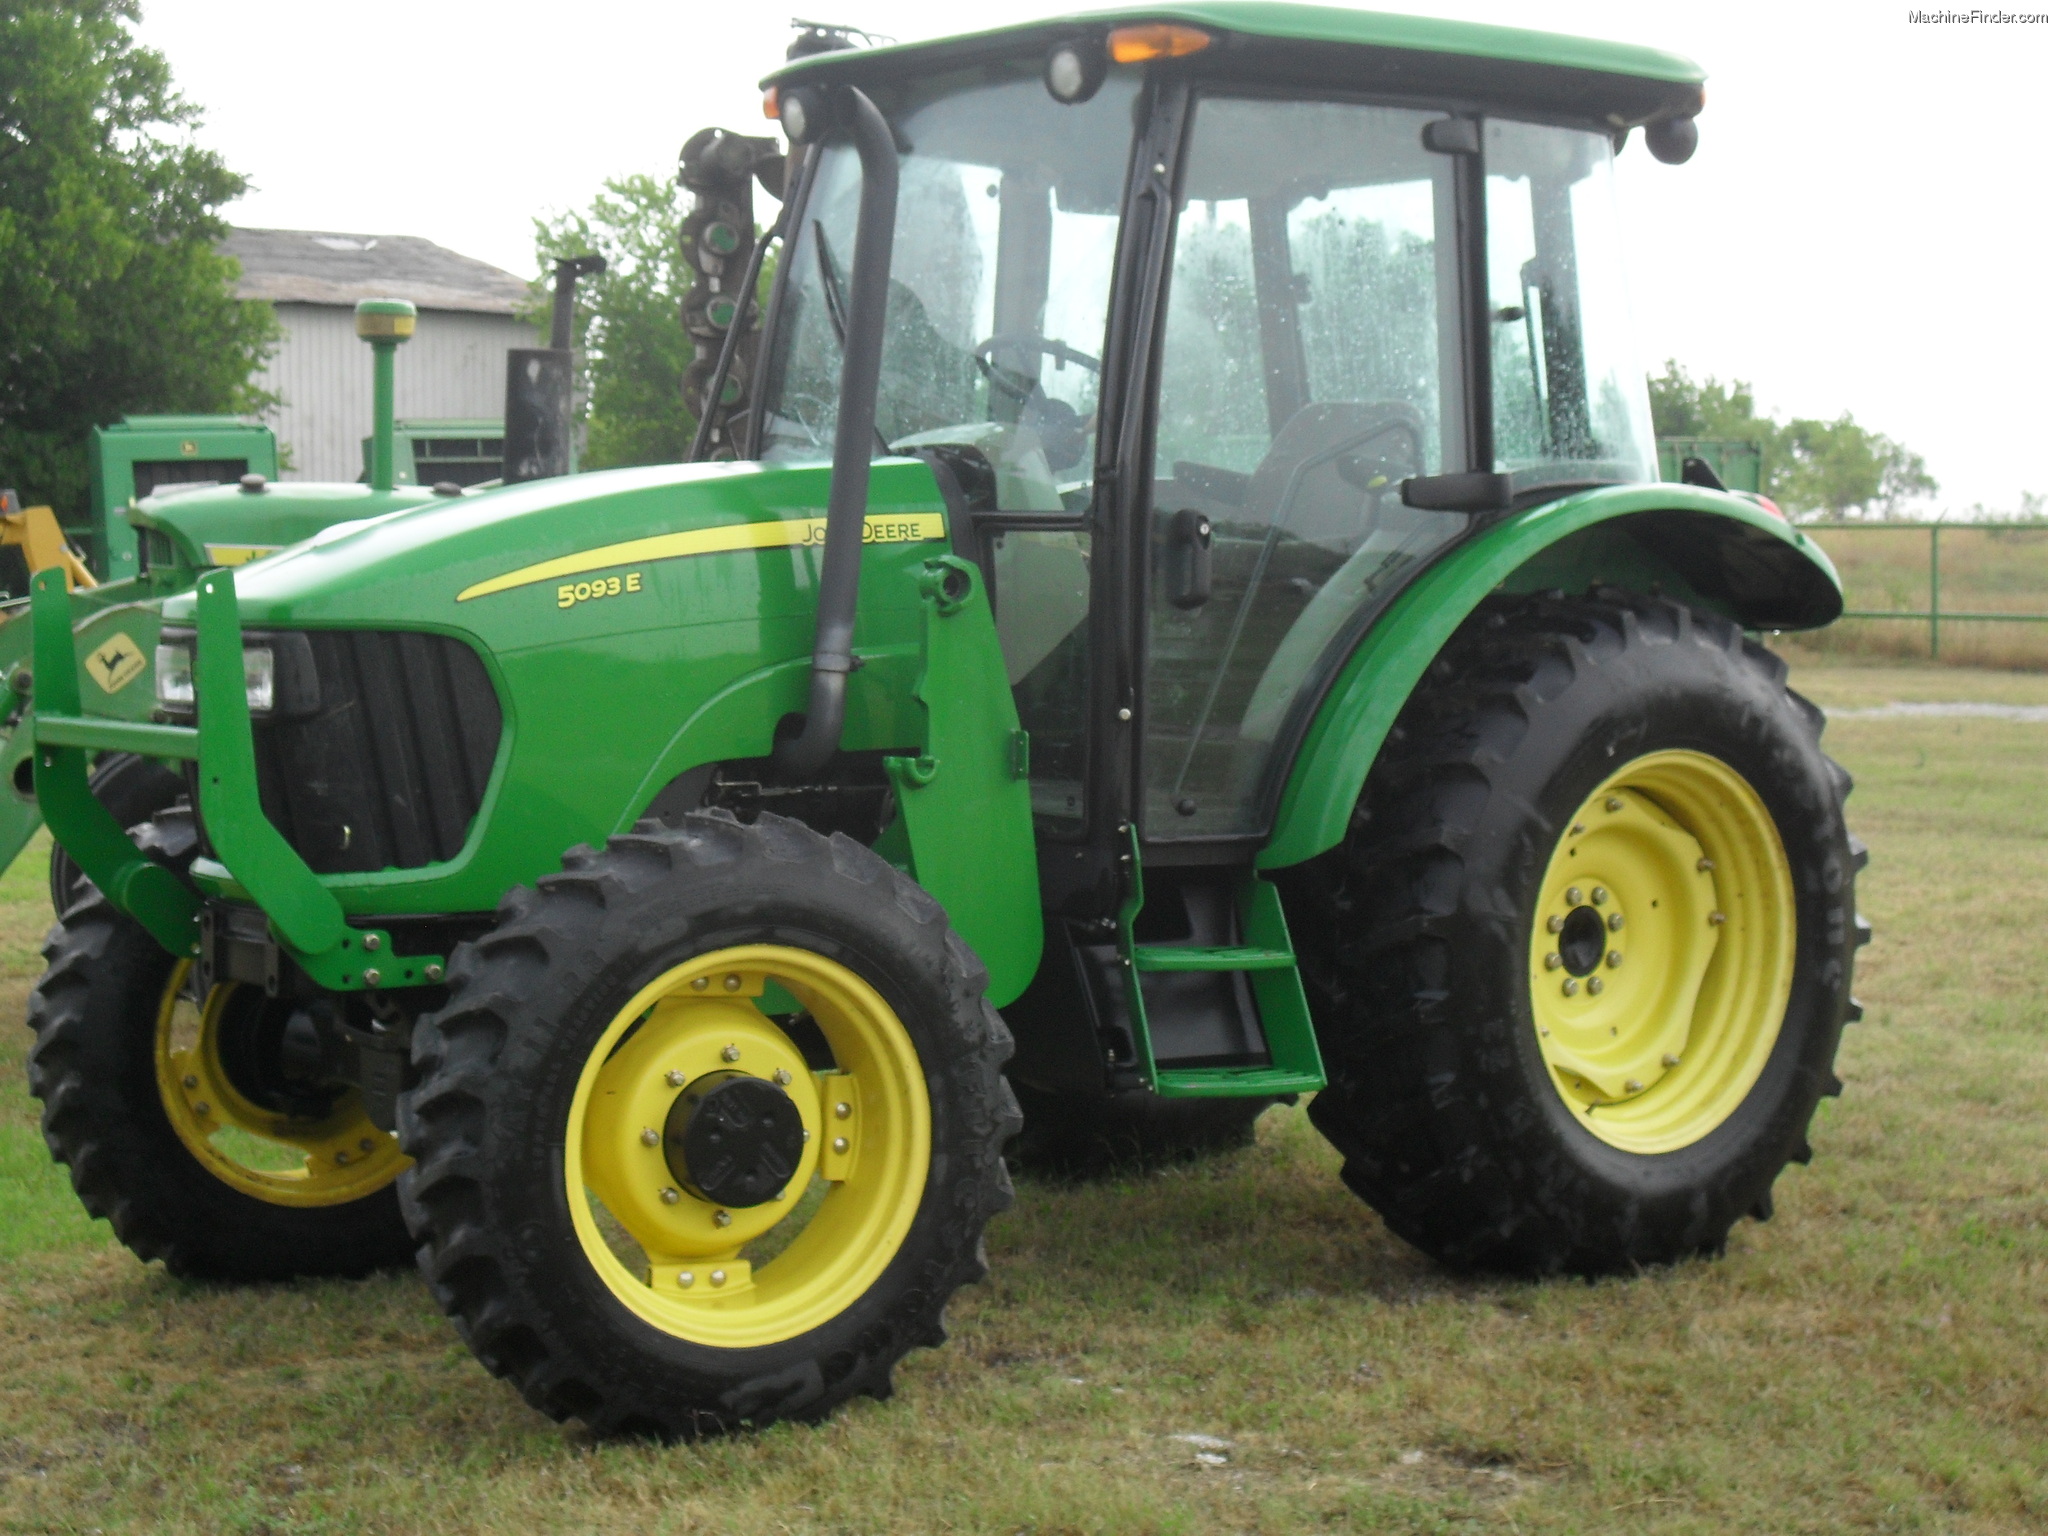 2009 John Deere 5093E Tractors - Utility (40-100hp) - John Deere ...